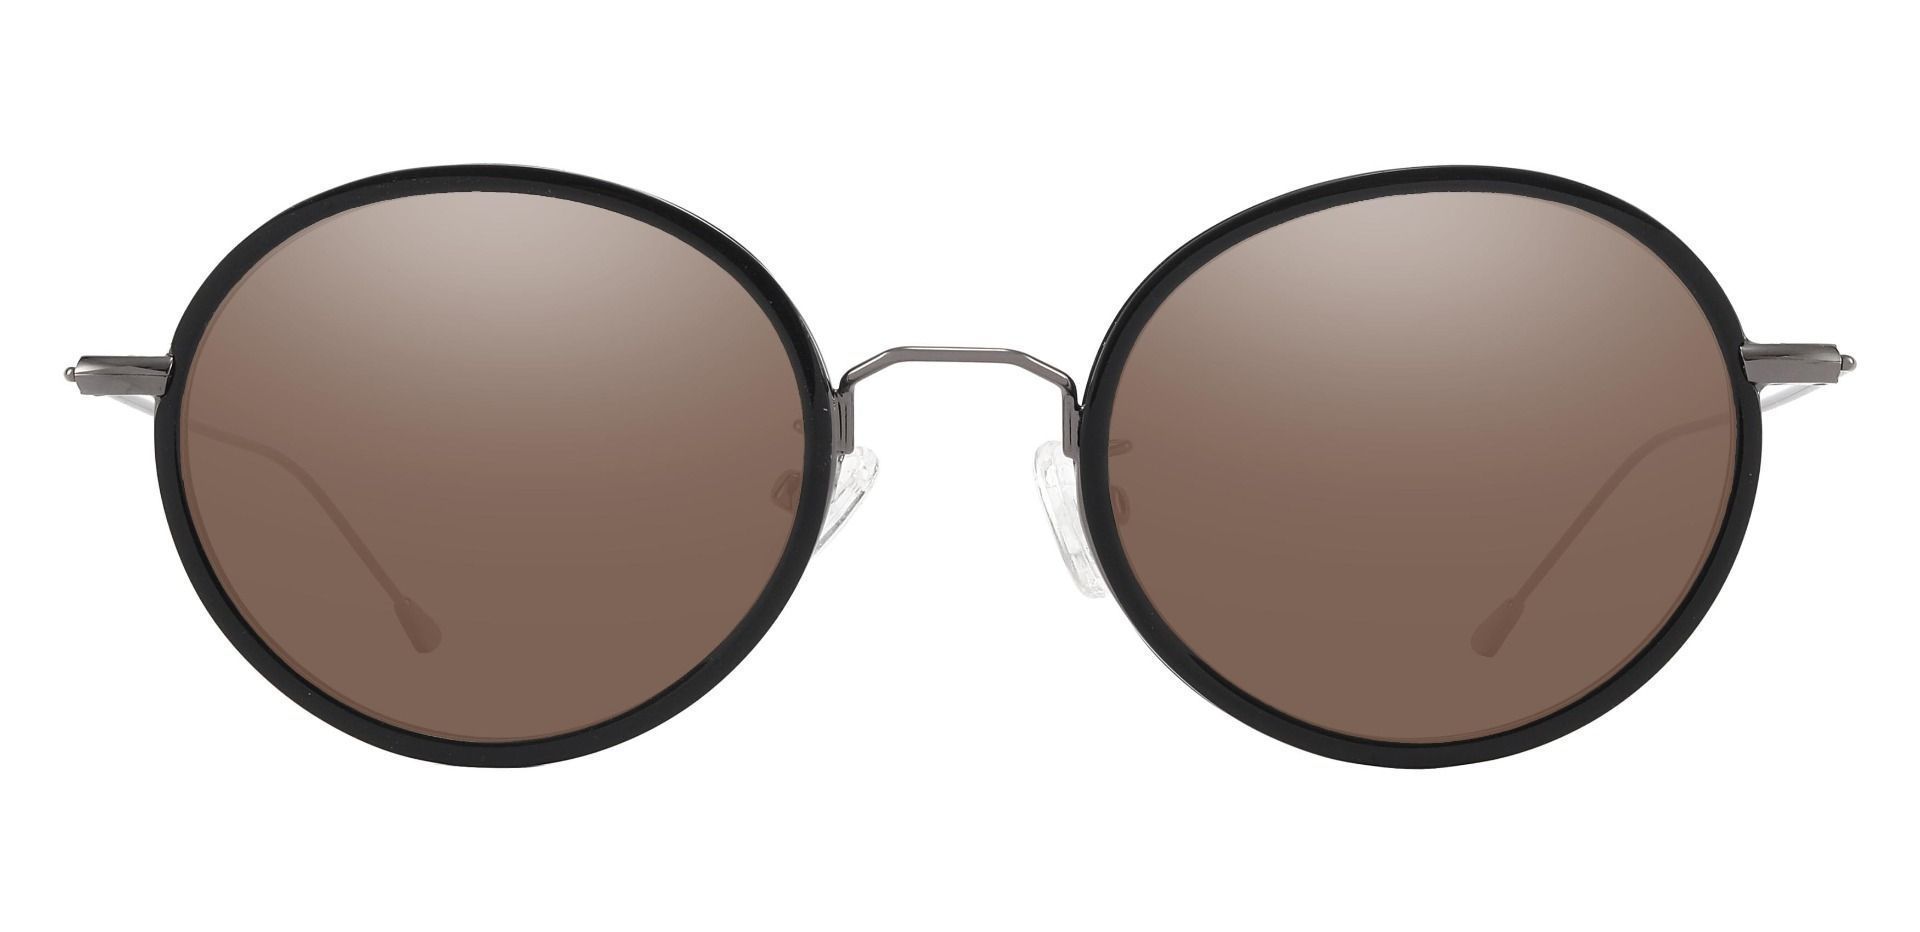 Malverne Oval Lined Bifocal Sunglasses - Black Frame With Brown Lenses